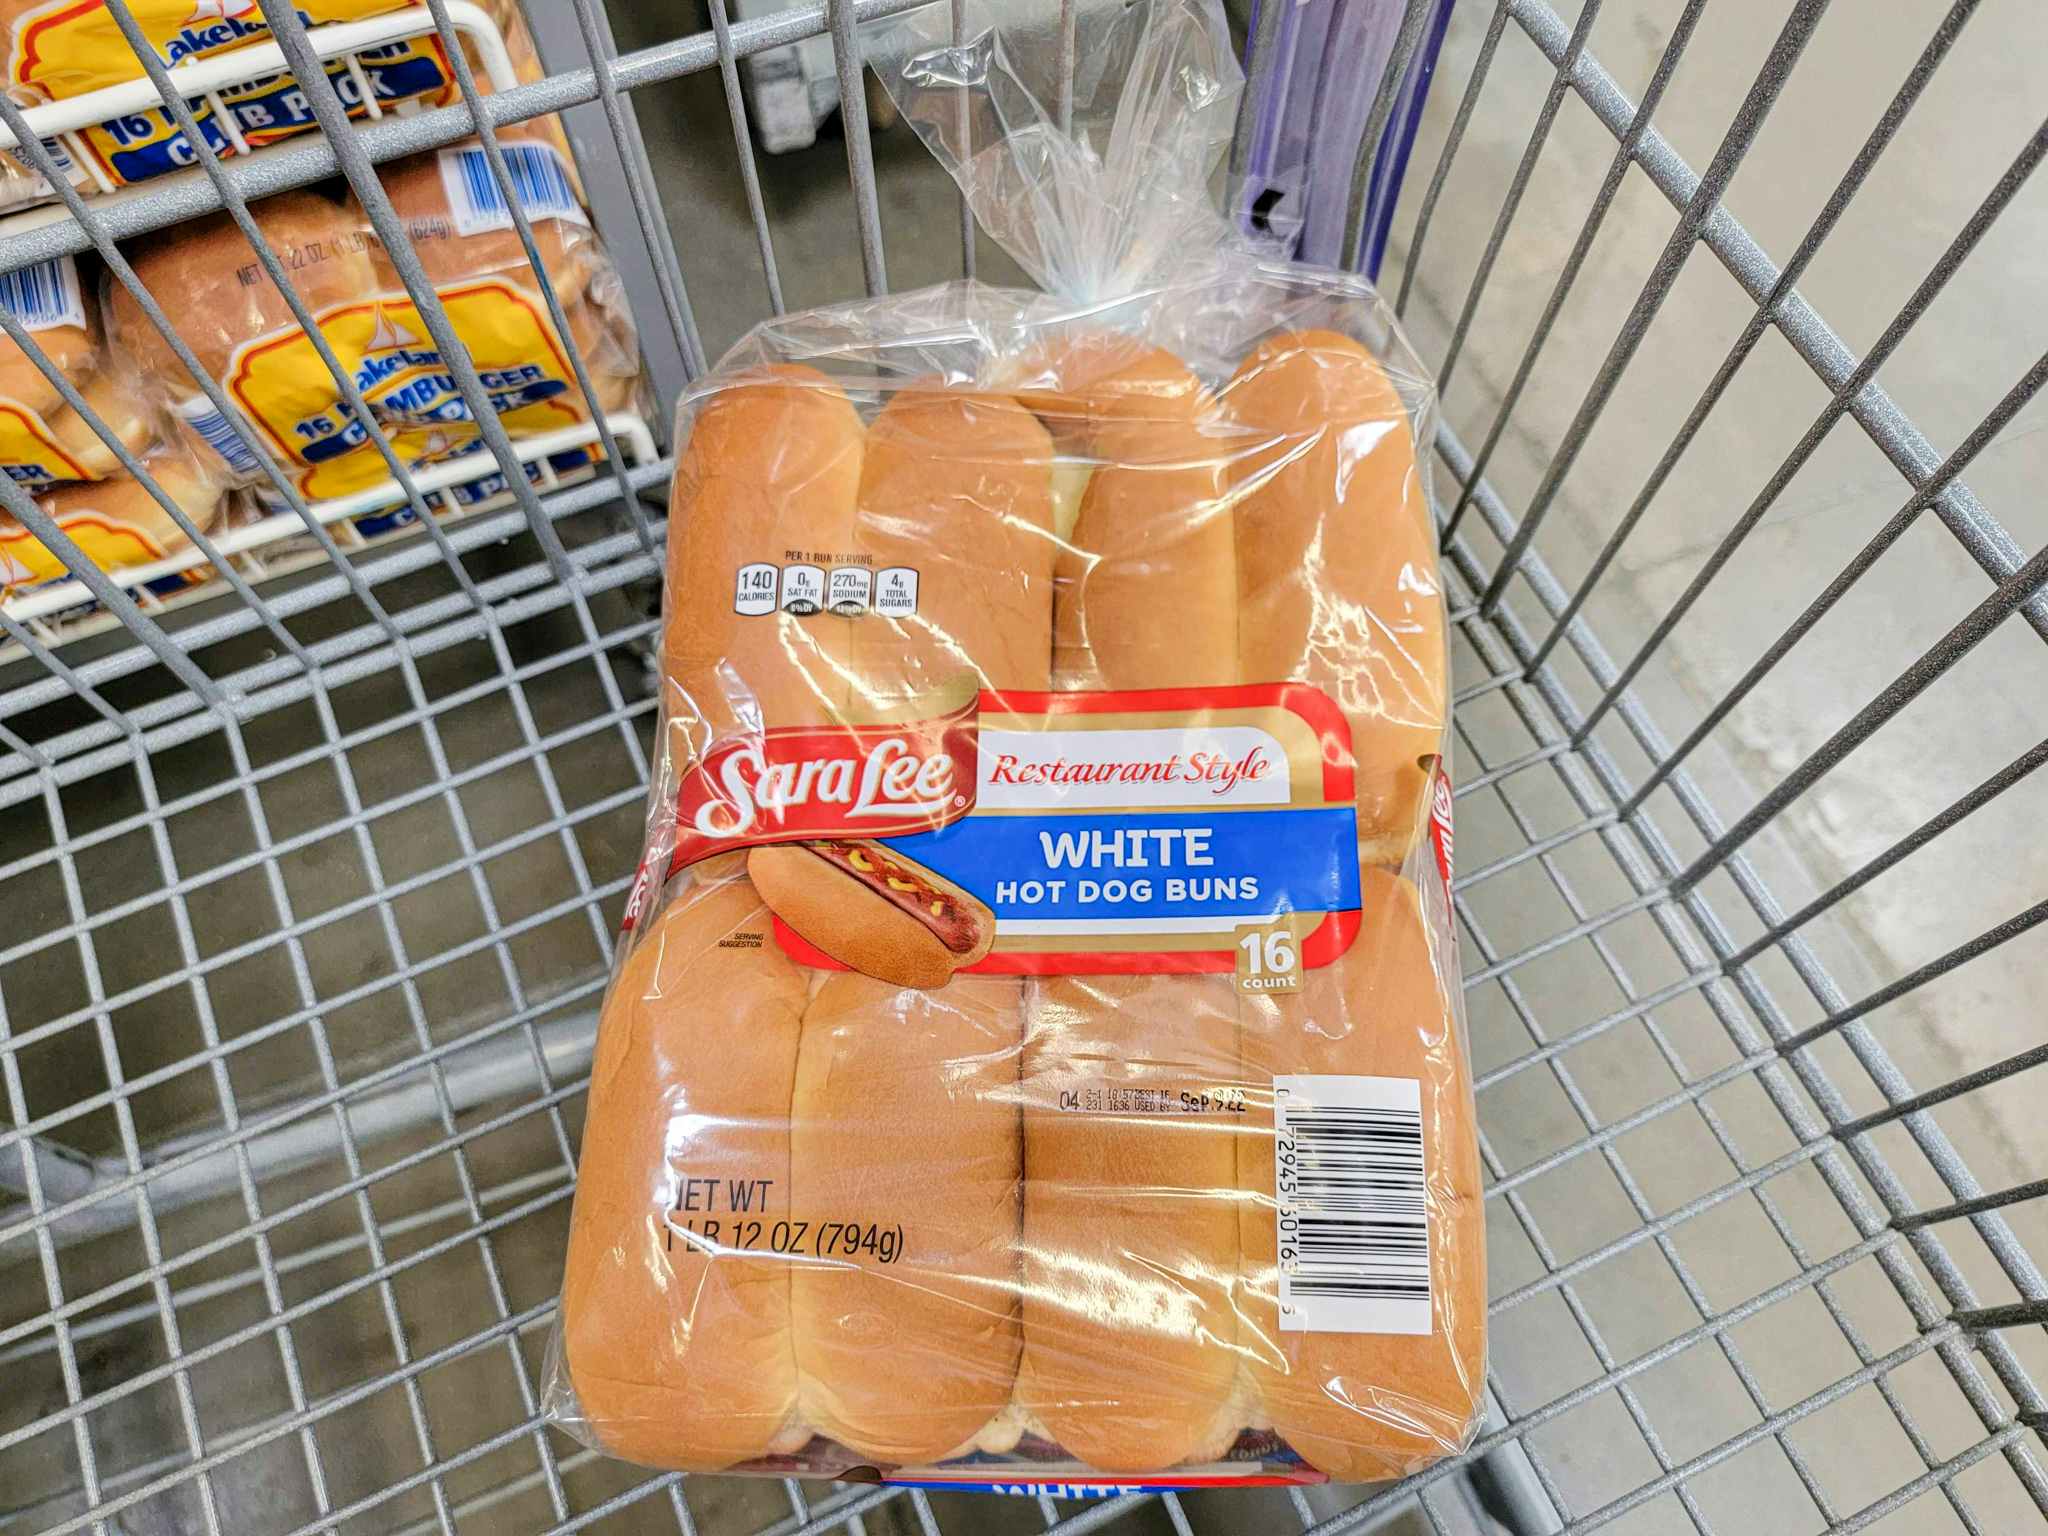 sara lee hot dog buns in a cart